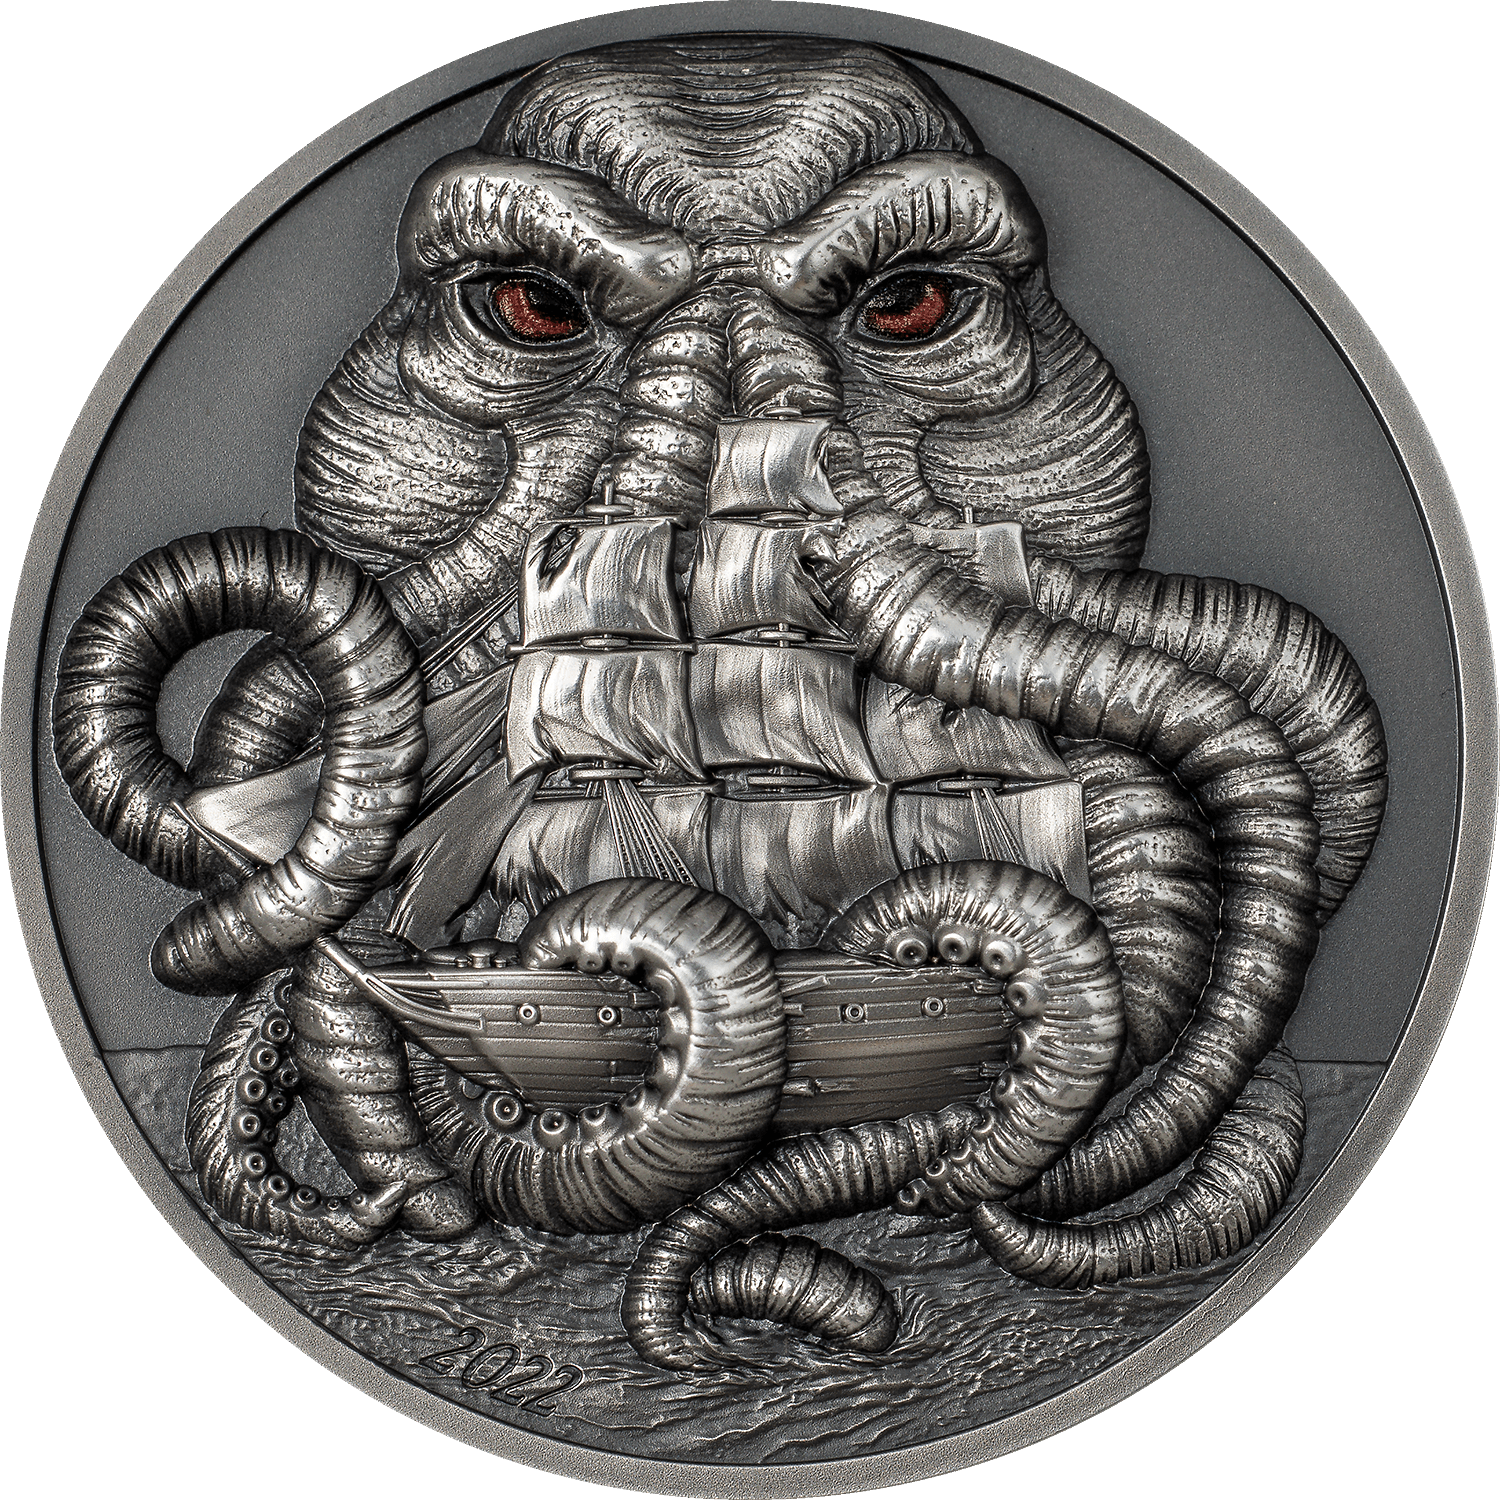 CTHULHU Howard Phillips Lovecraft 3 Oz Silver Coin $20 Palau 2022 - PARTHAVA COIN